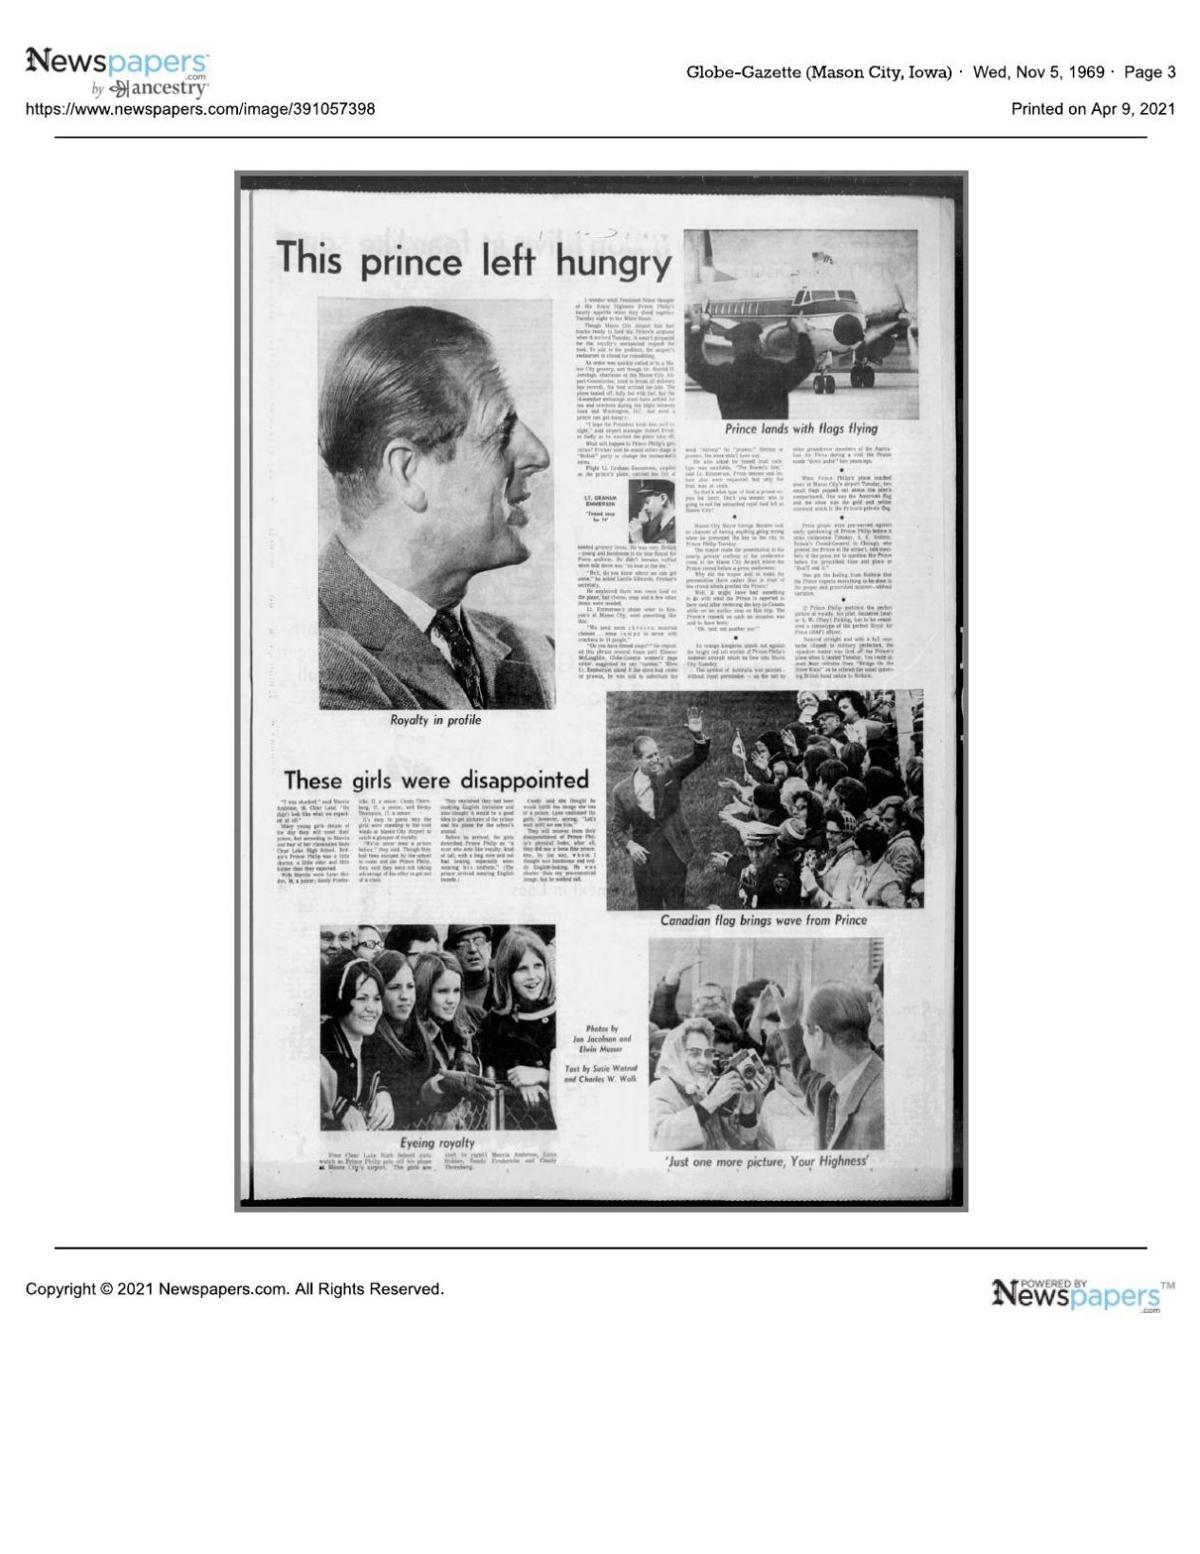 Prince Philip visit-Globe Gazette